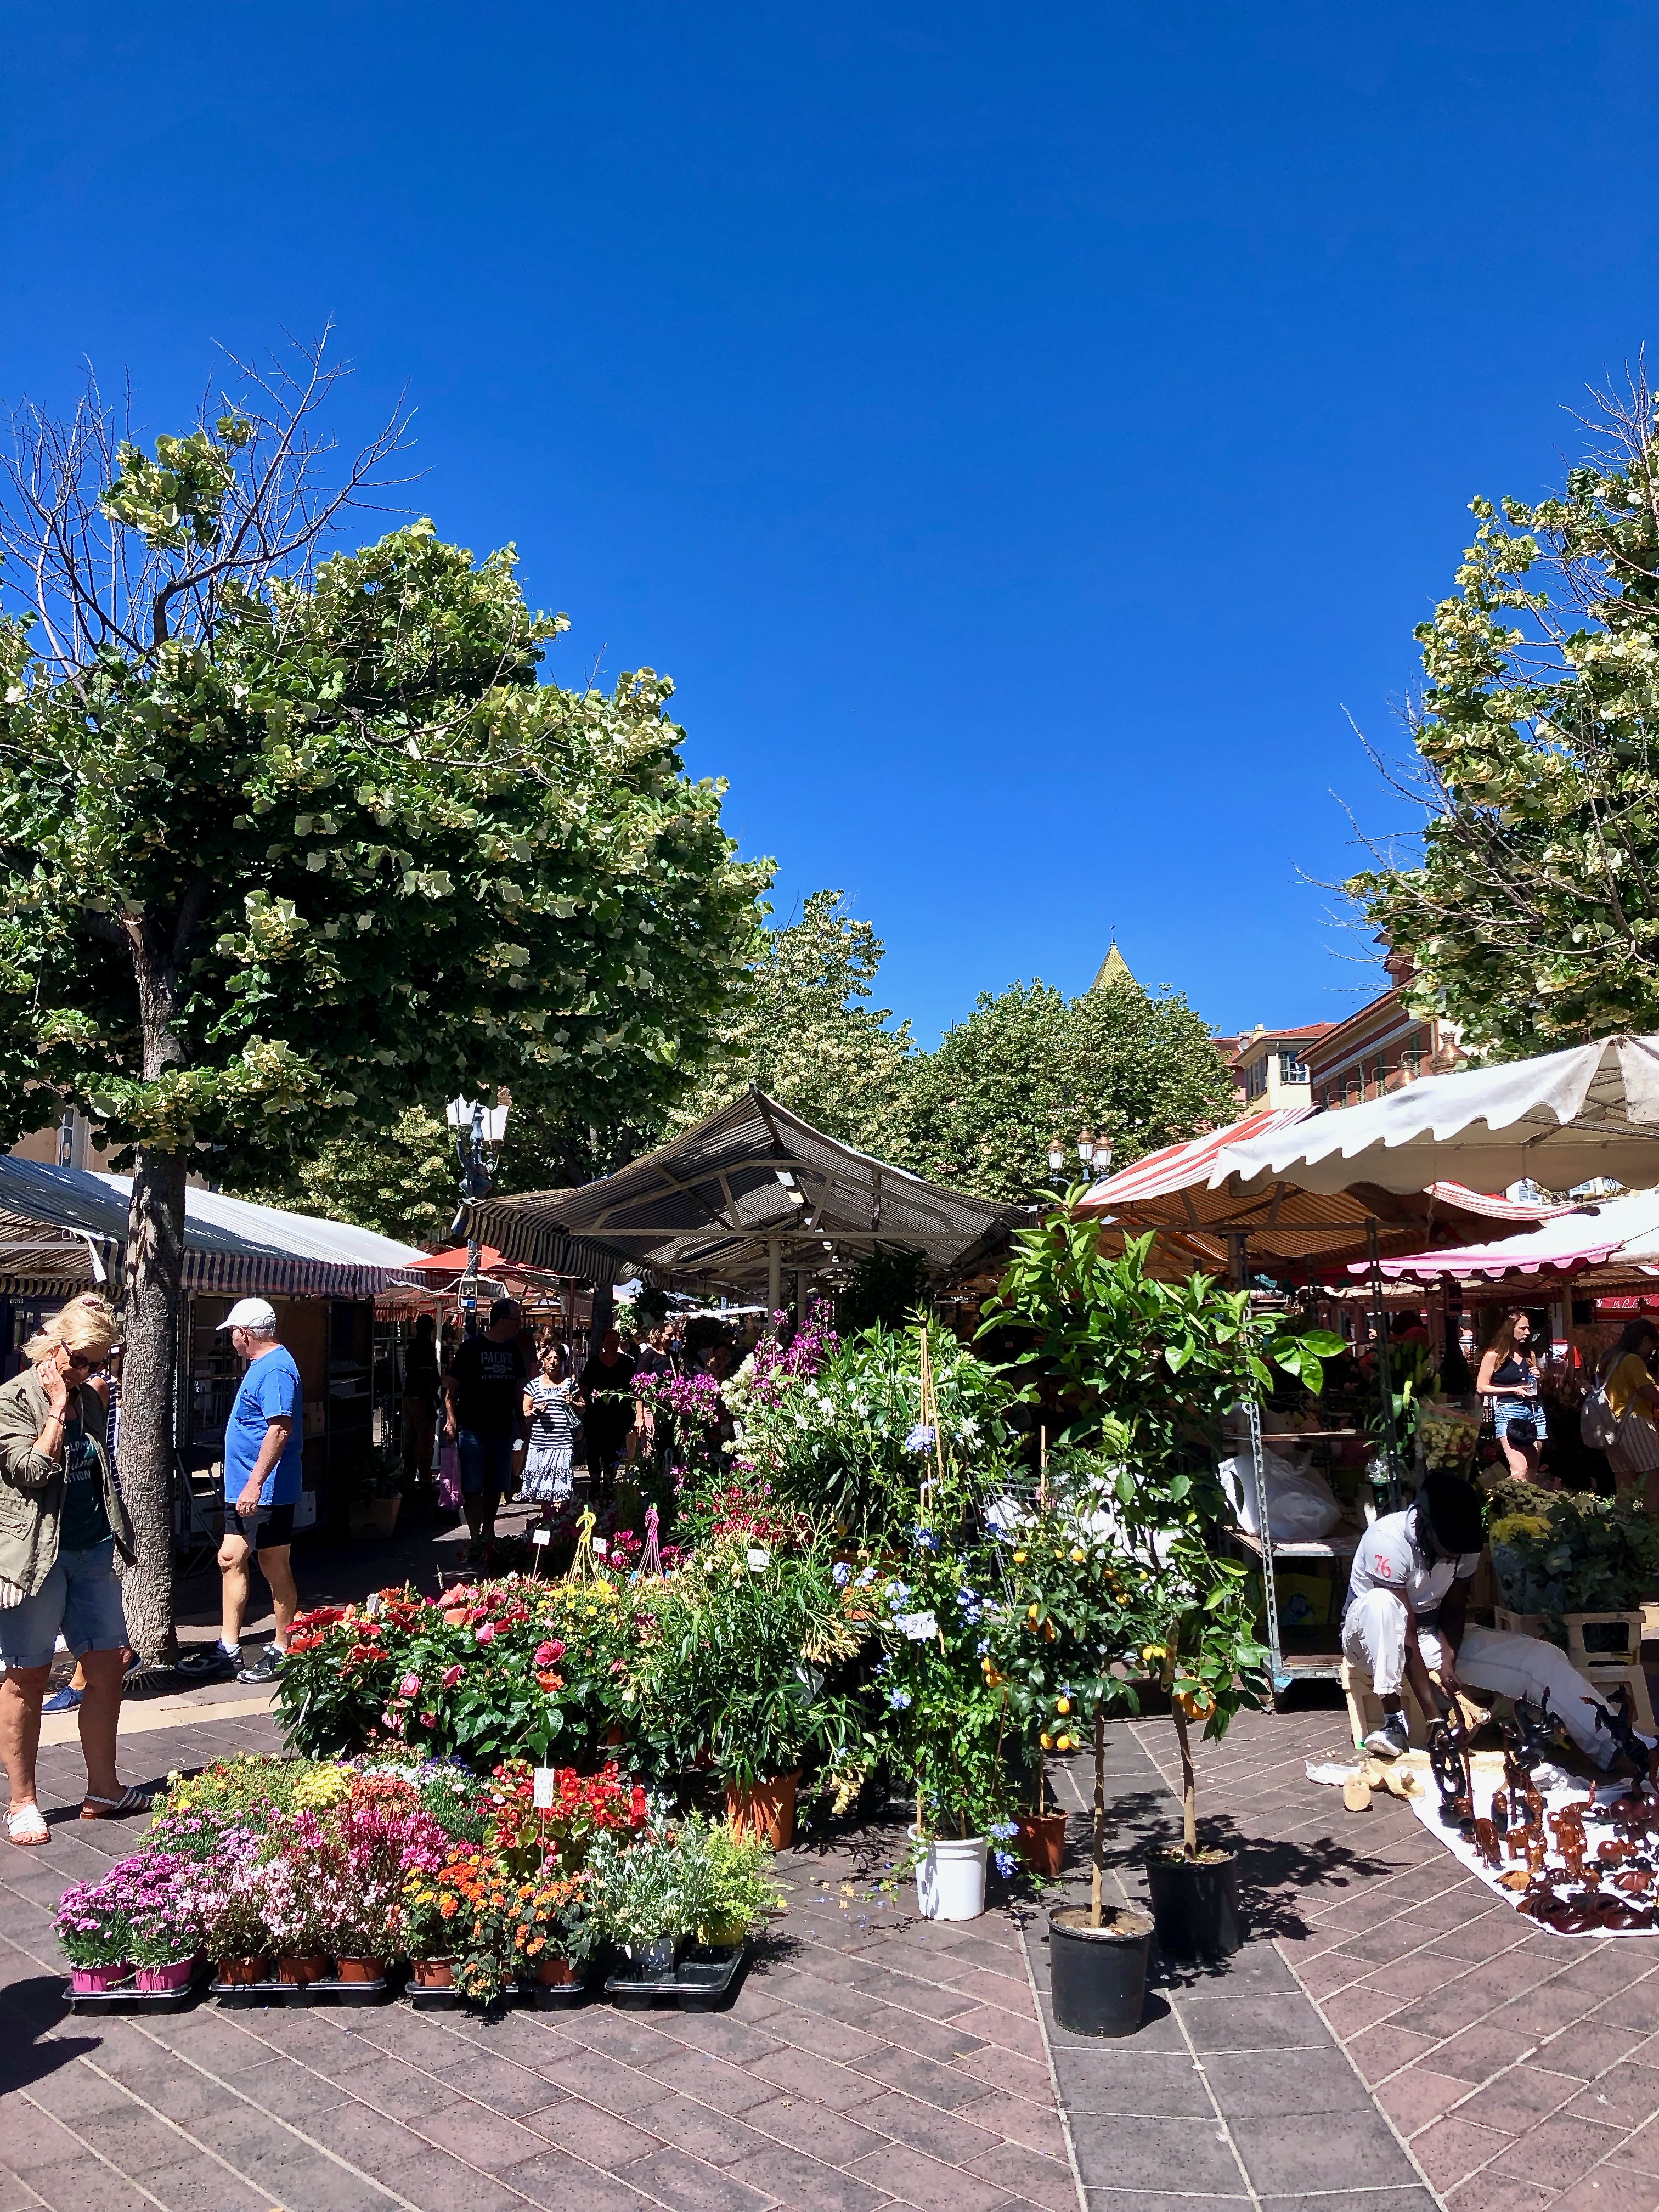 flower market in Nice, France